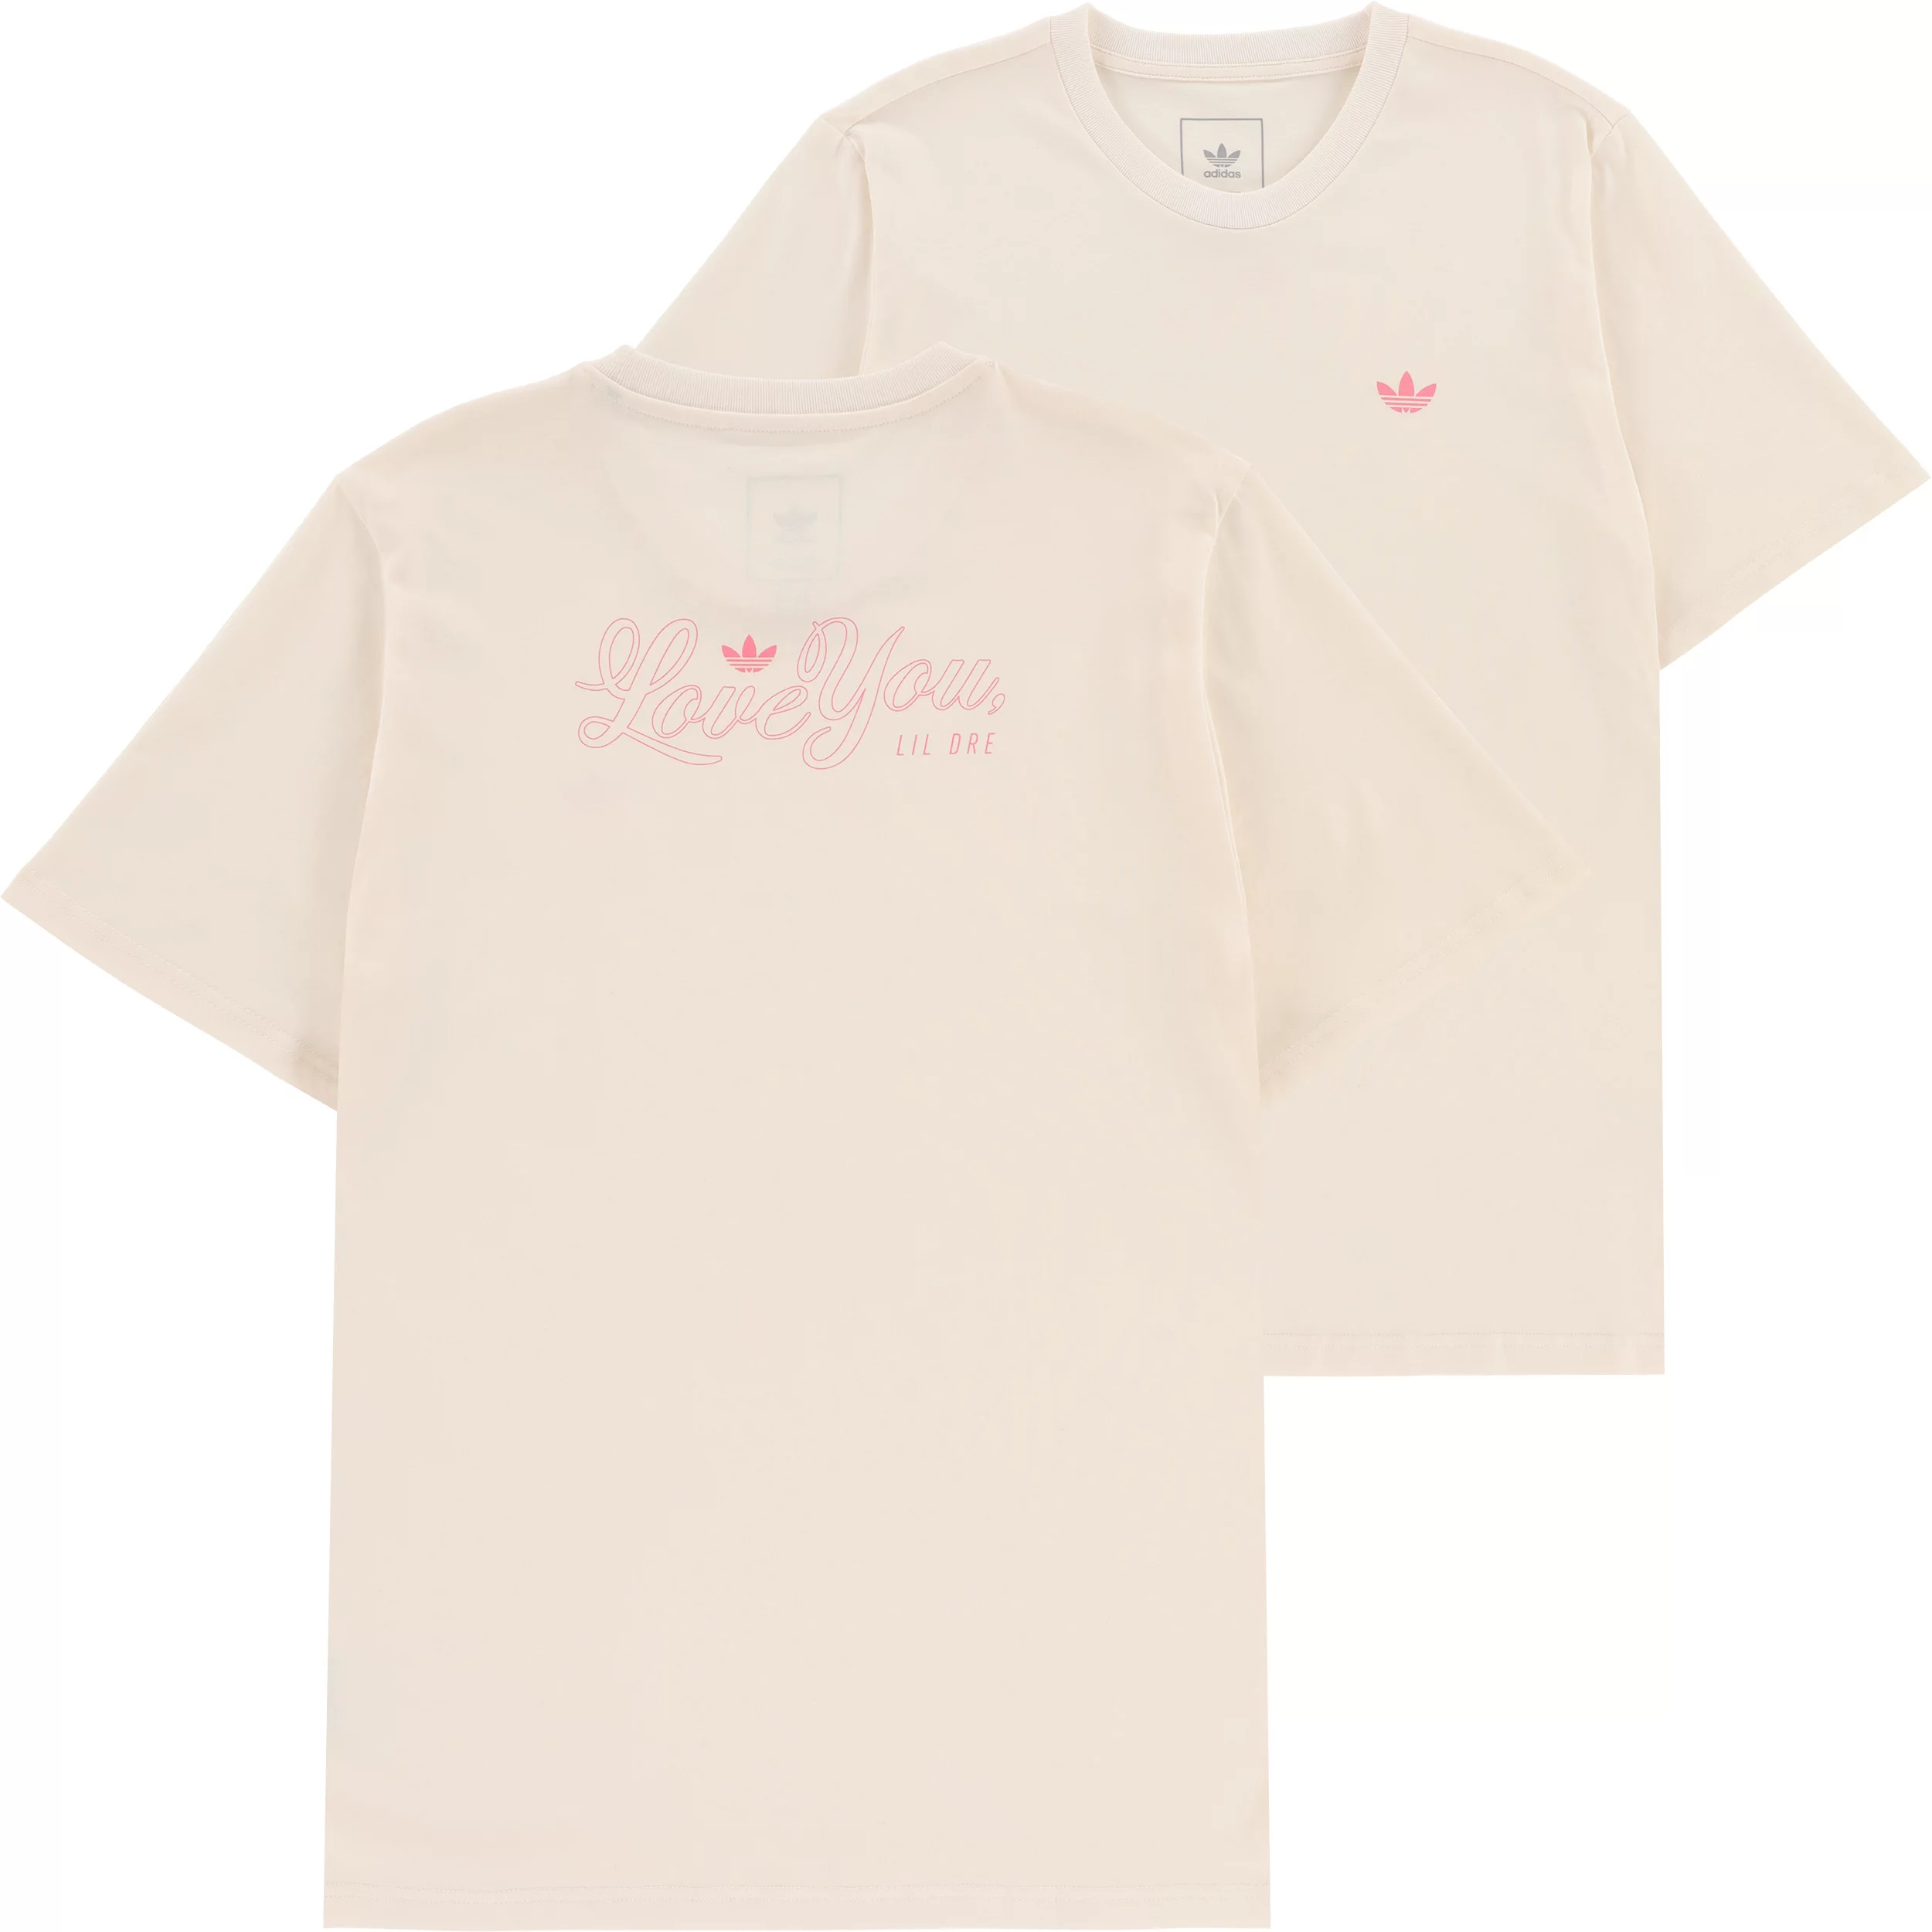 Intact ijzer foto Adidas Lil Dre Message T-Shirt - chalk white/bliss pink | Tactics